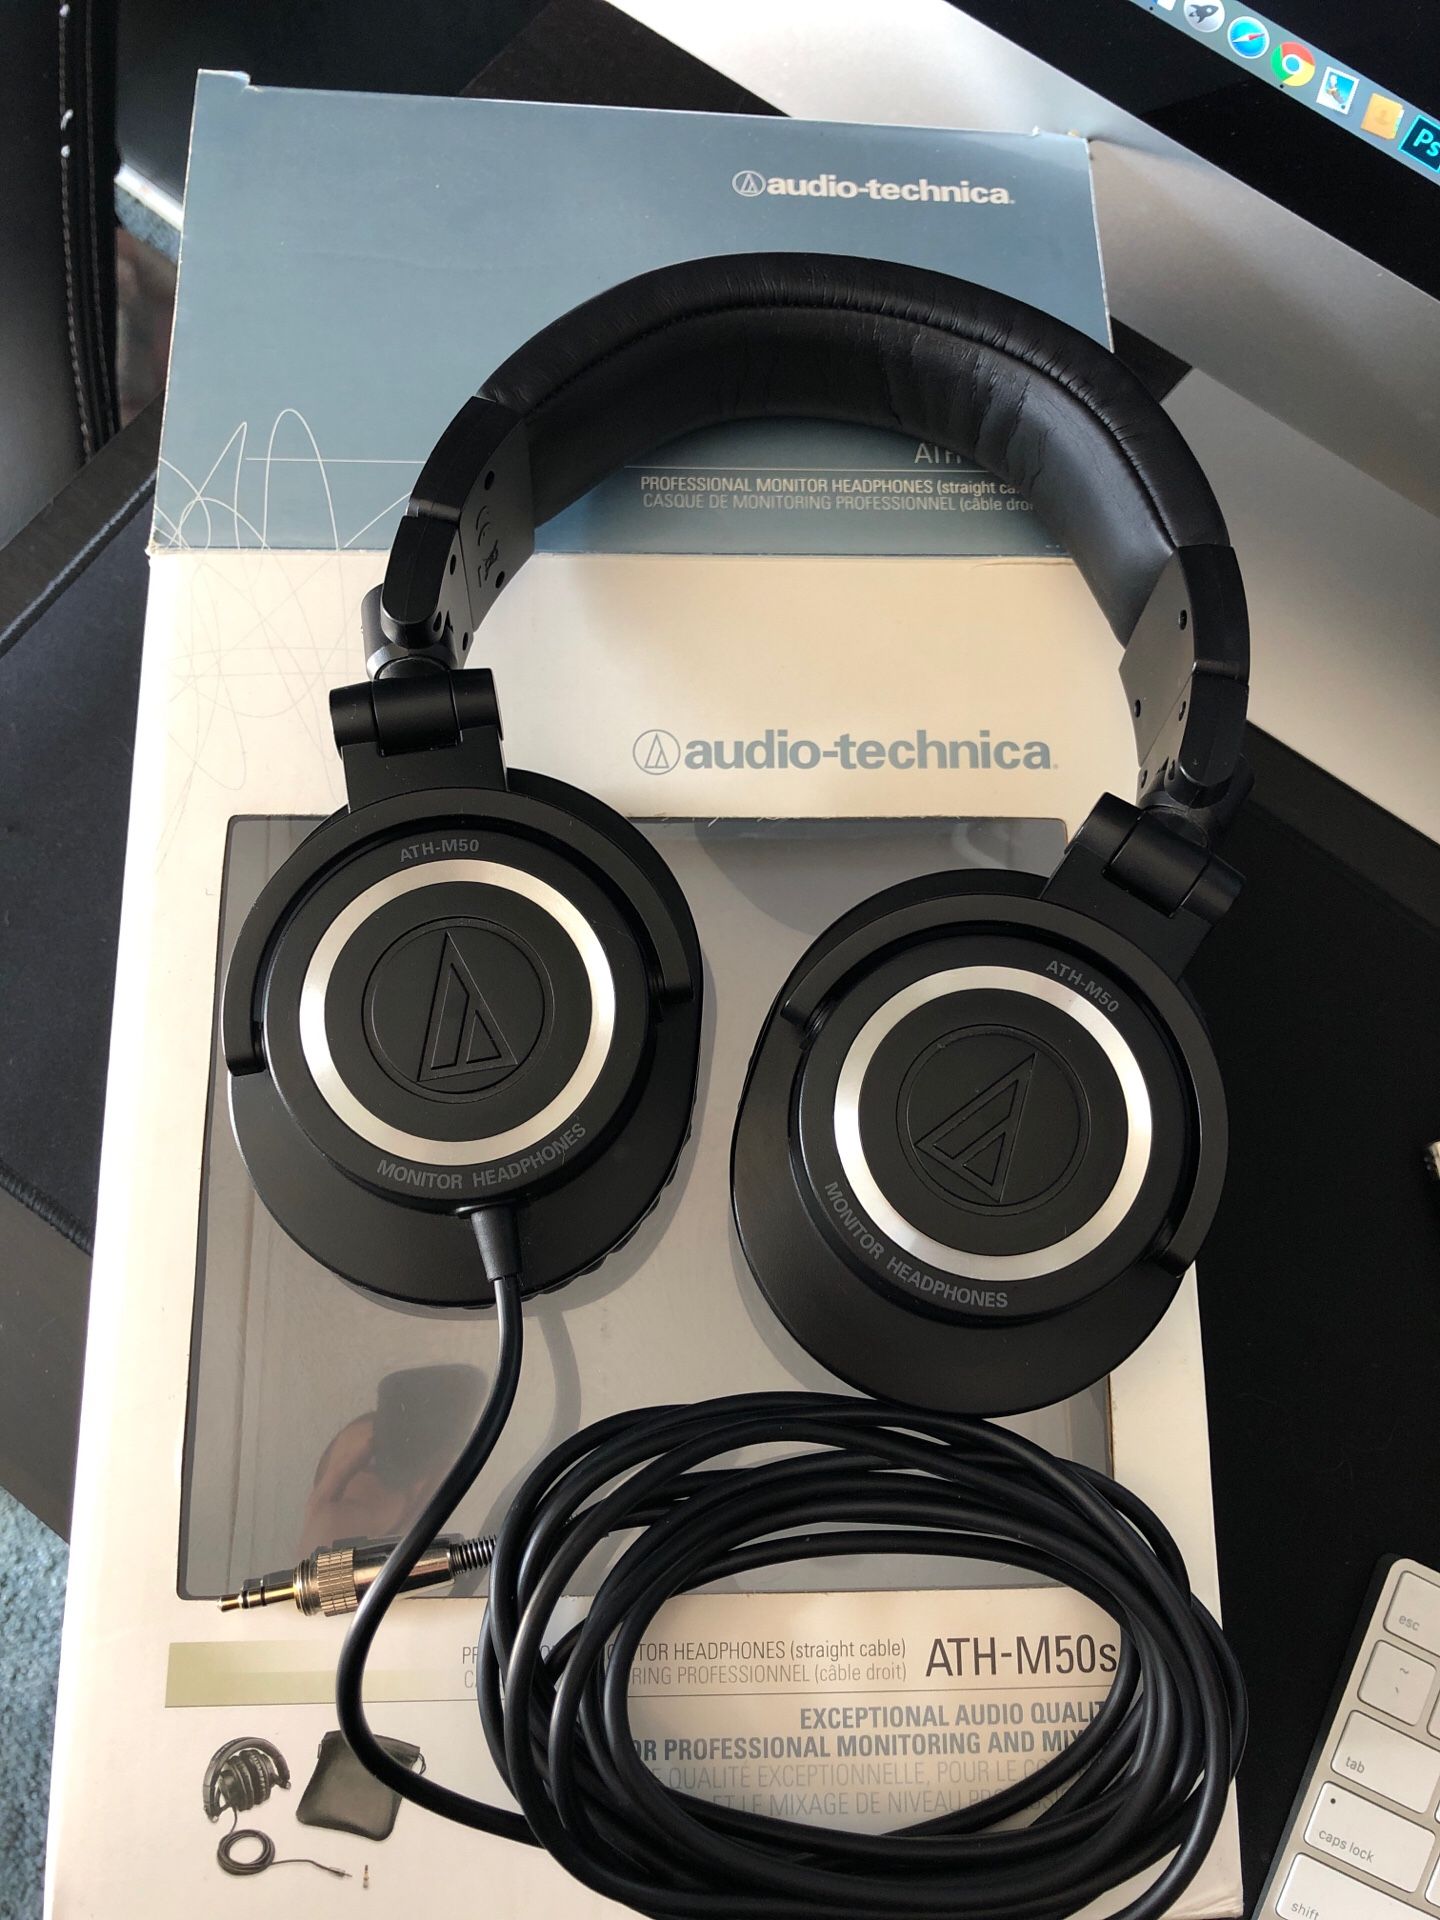 Audio-technica headphones